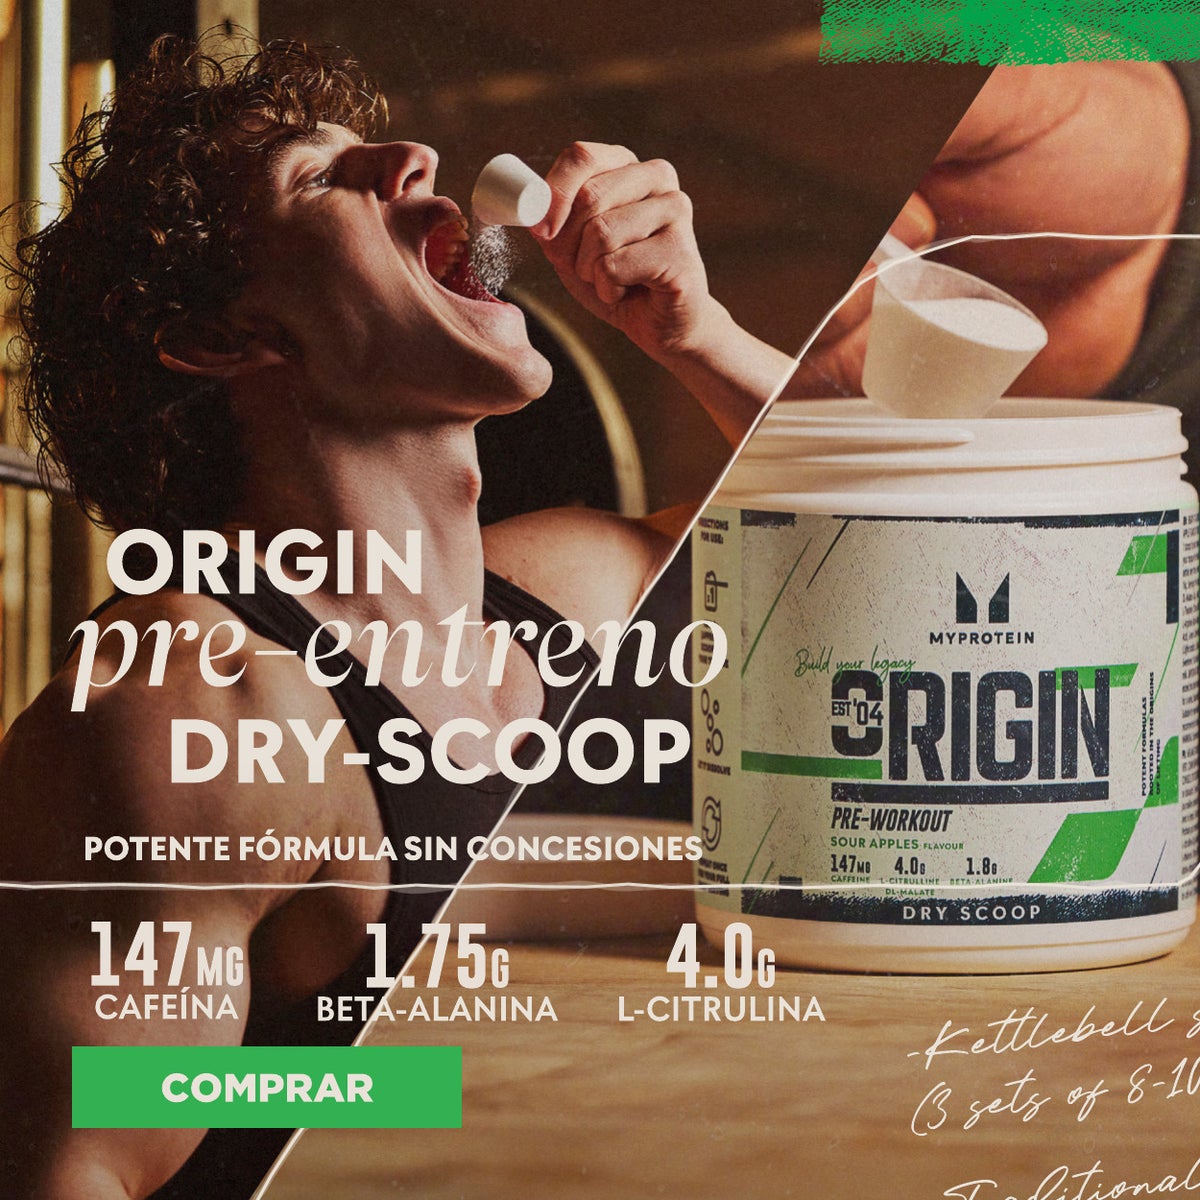 Origin Pre Workout Dry Scoop